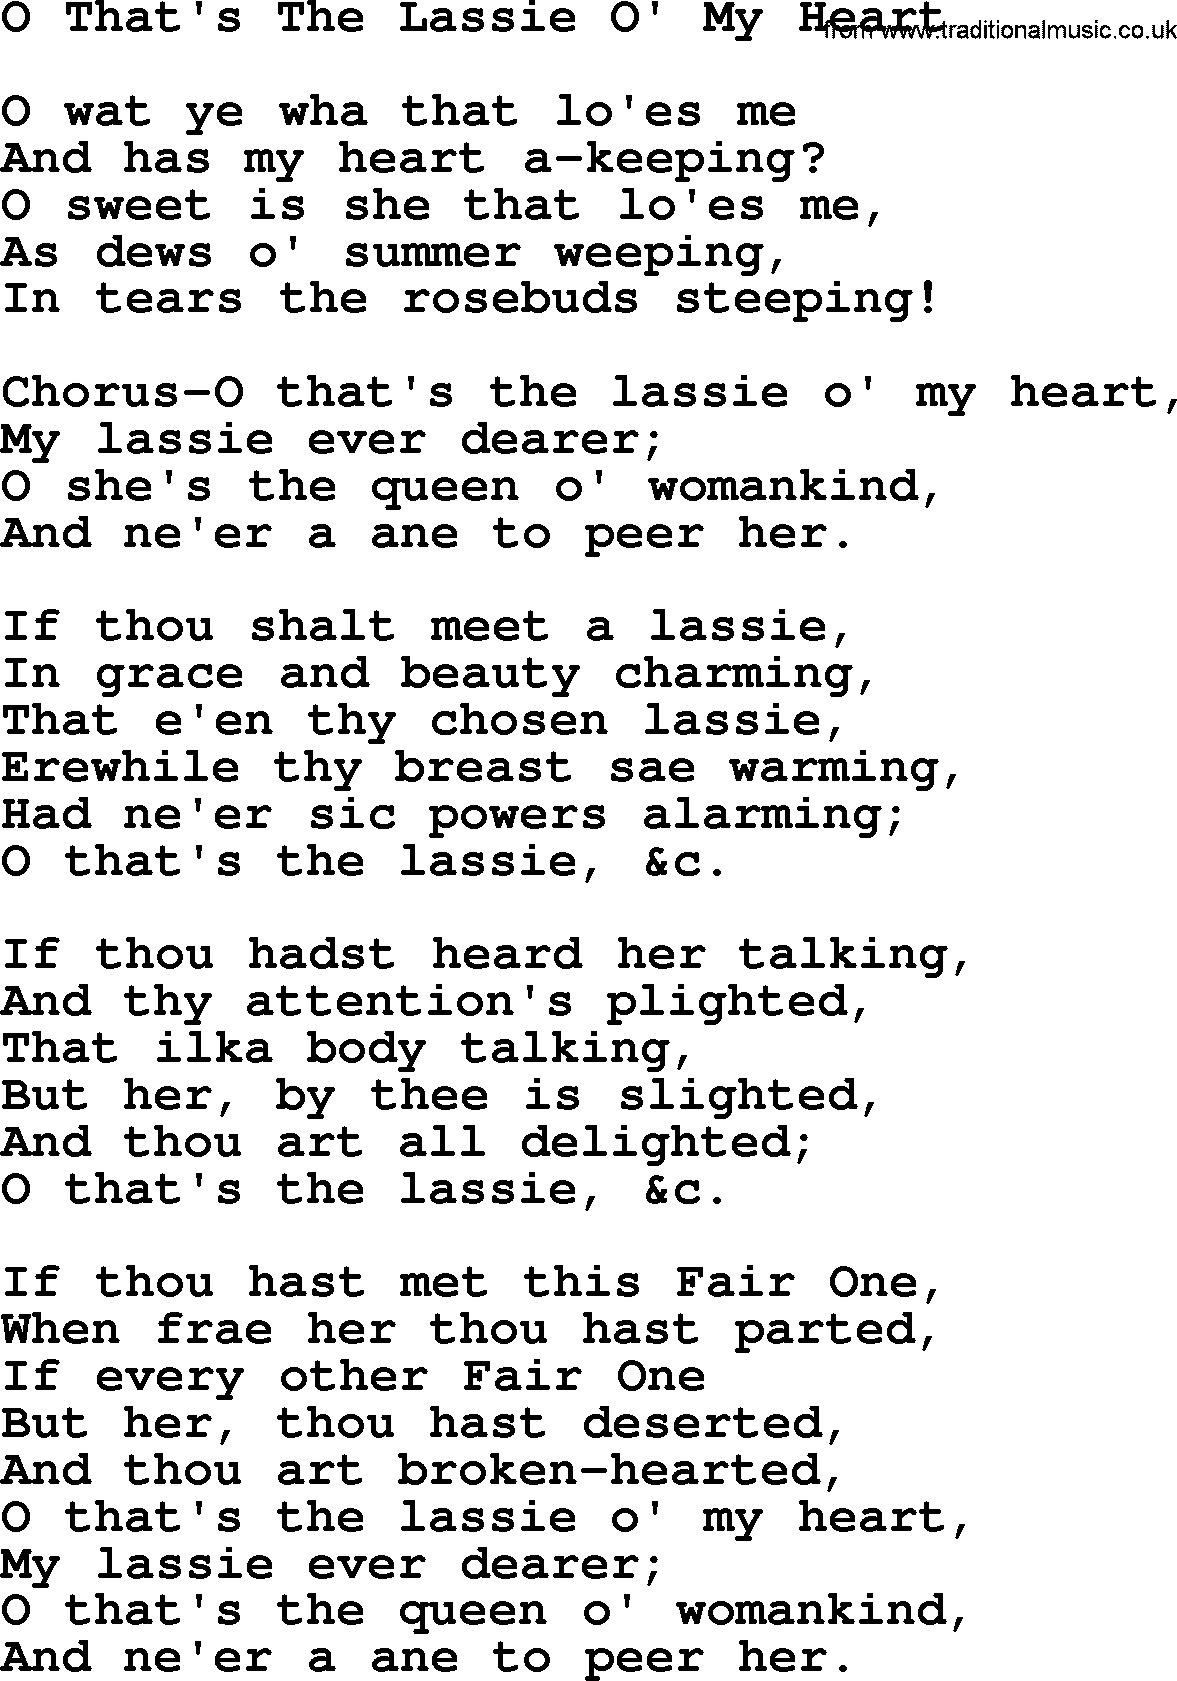 Robert Burns Songs & Lyrics: O That's The Lassie O' My Heart